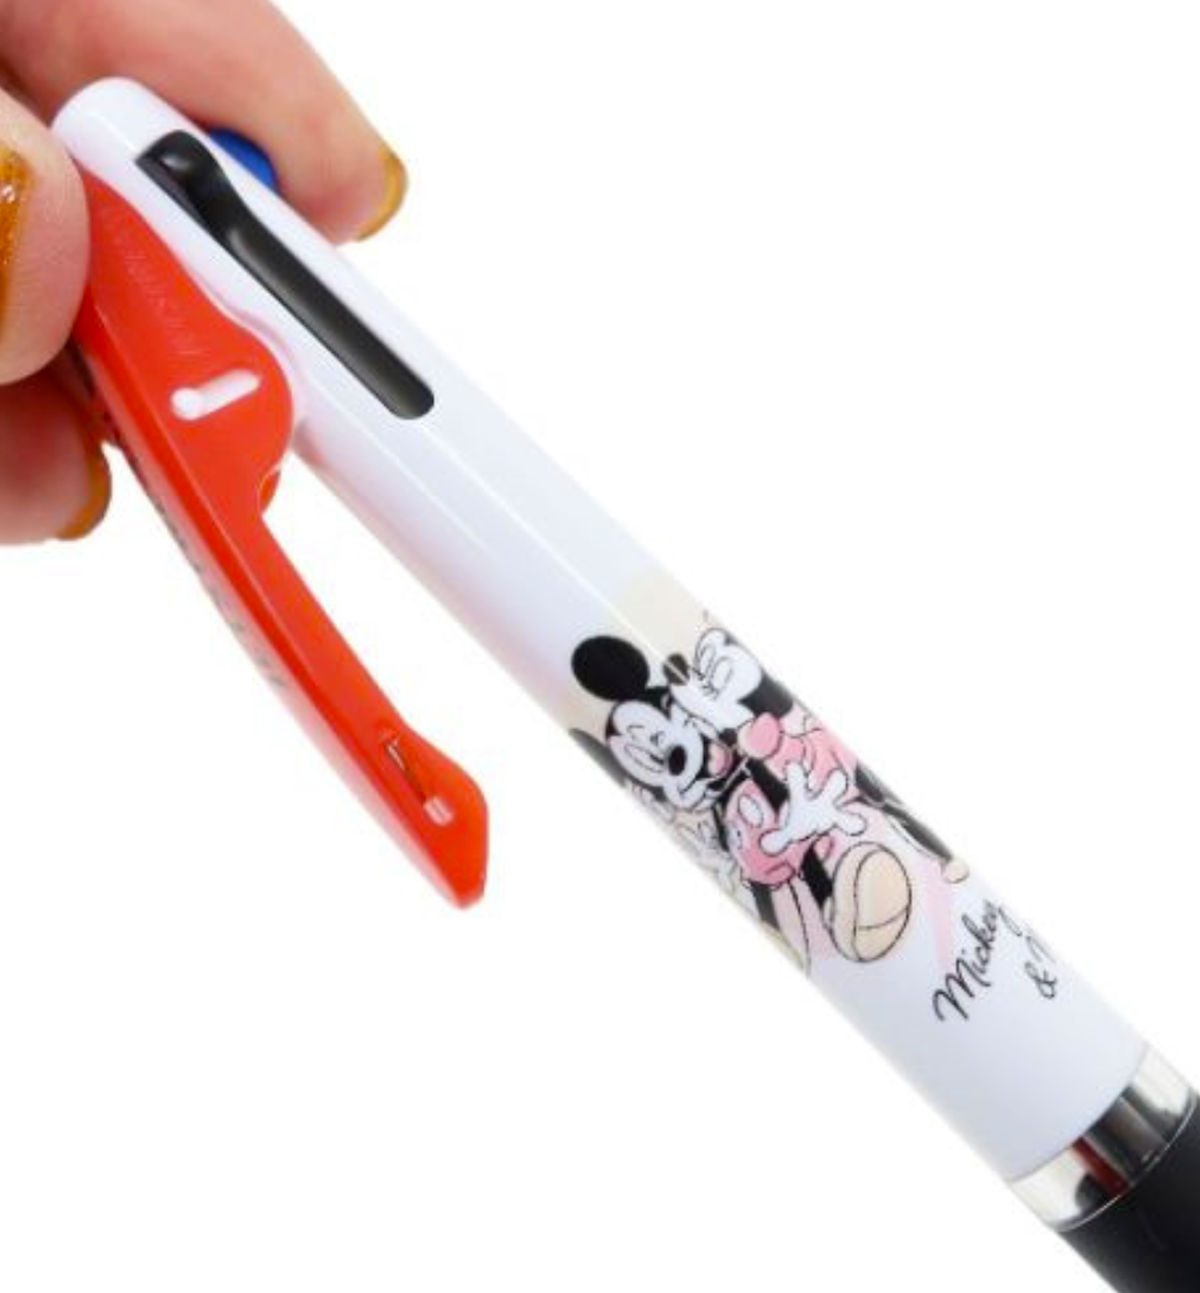 Disney Jetstream 0.5mm Pen [Mickey & Minnie]